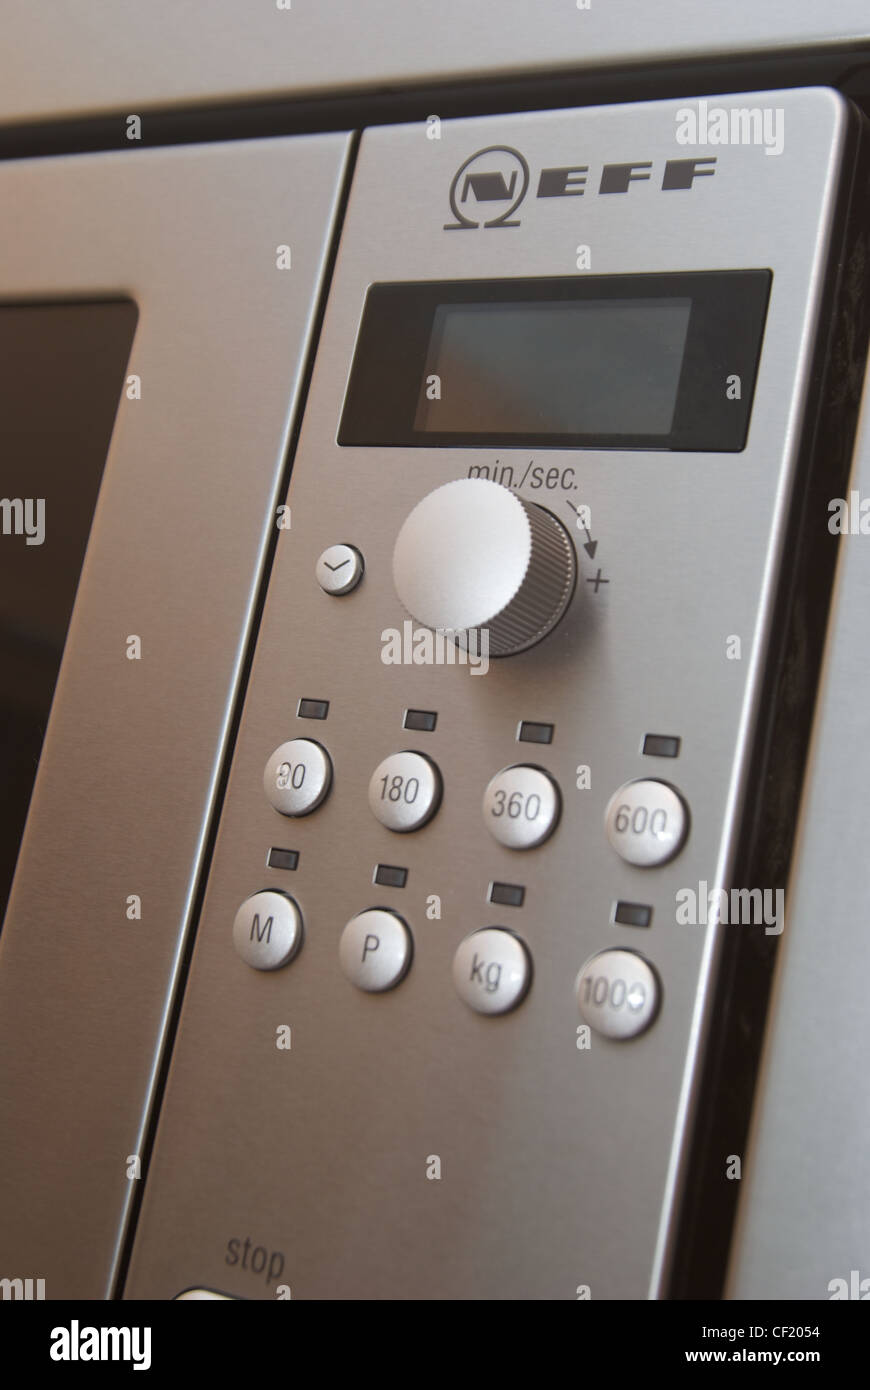 Neff microwave oven control panel Stock Photo - Alamy